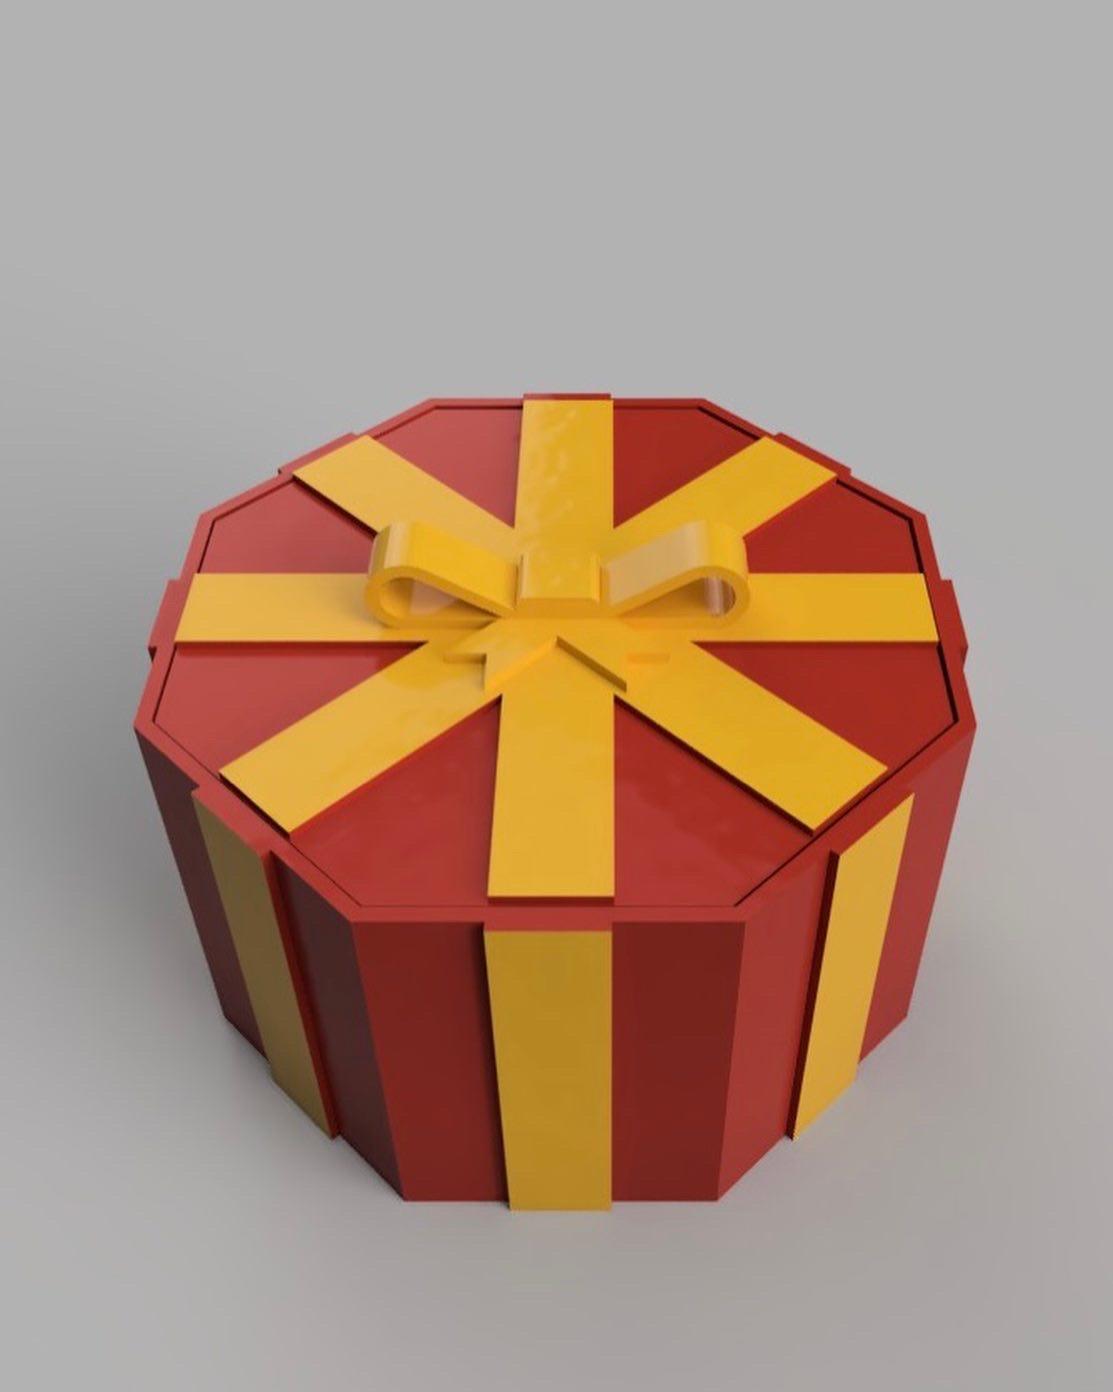 Octo Gift Box - workspace challenge  3d model